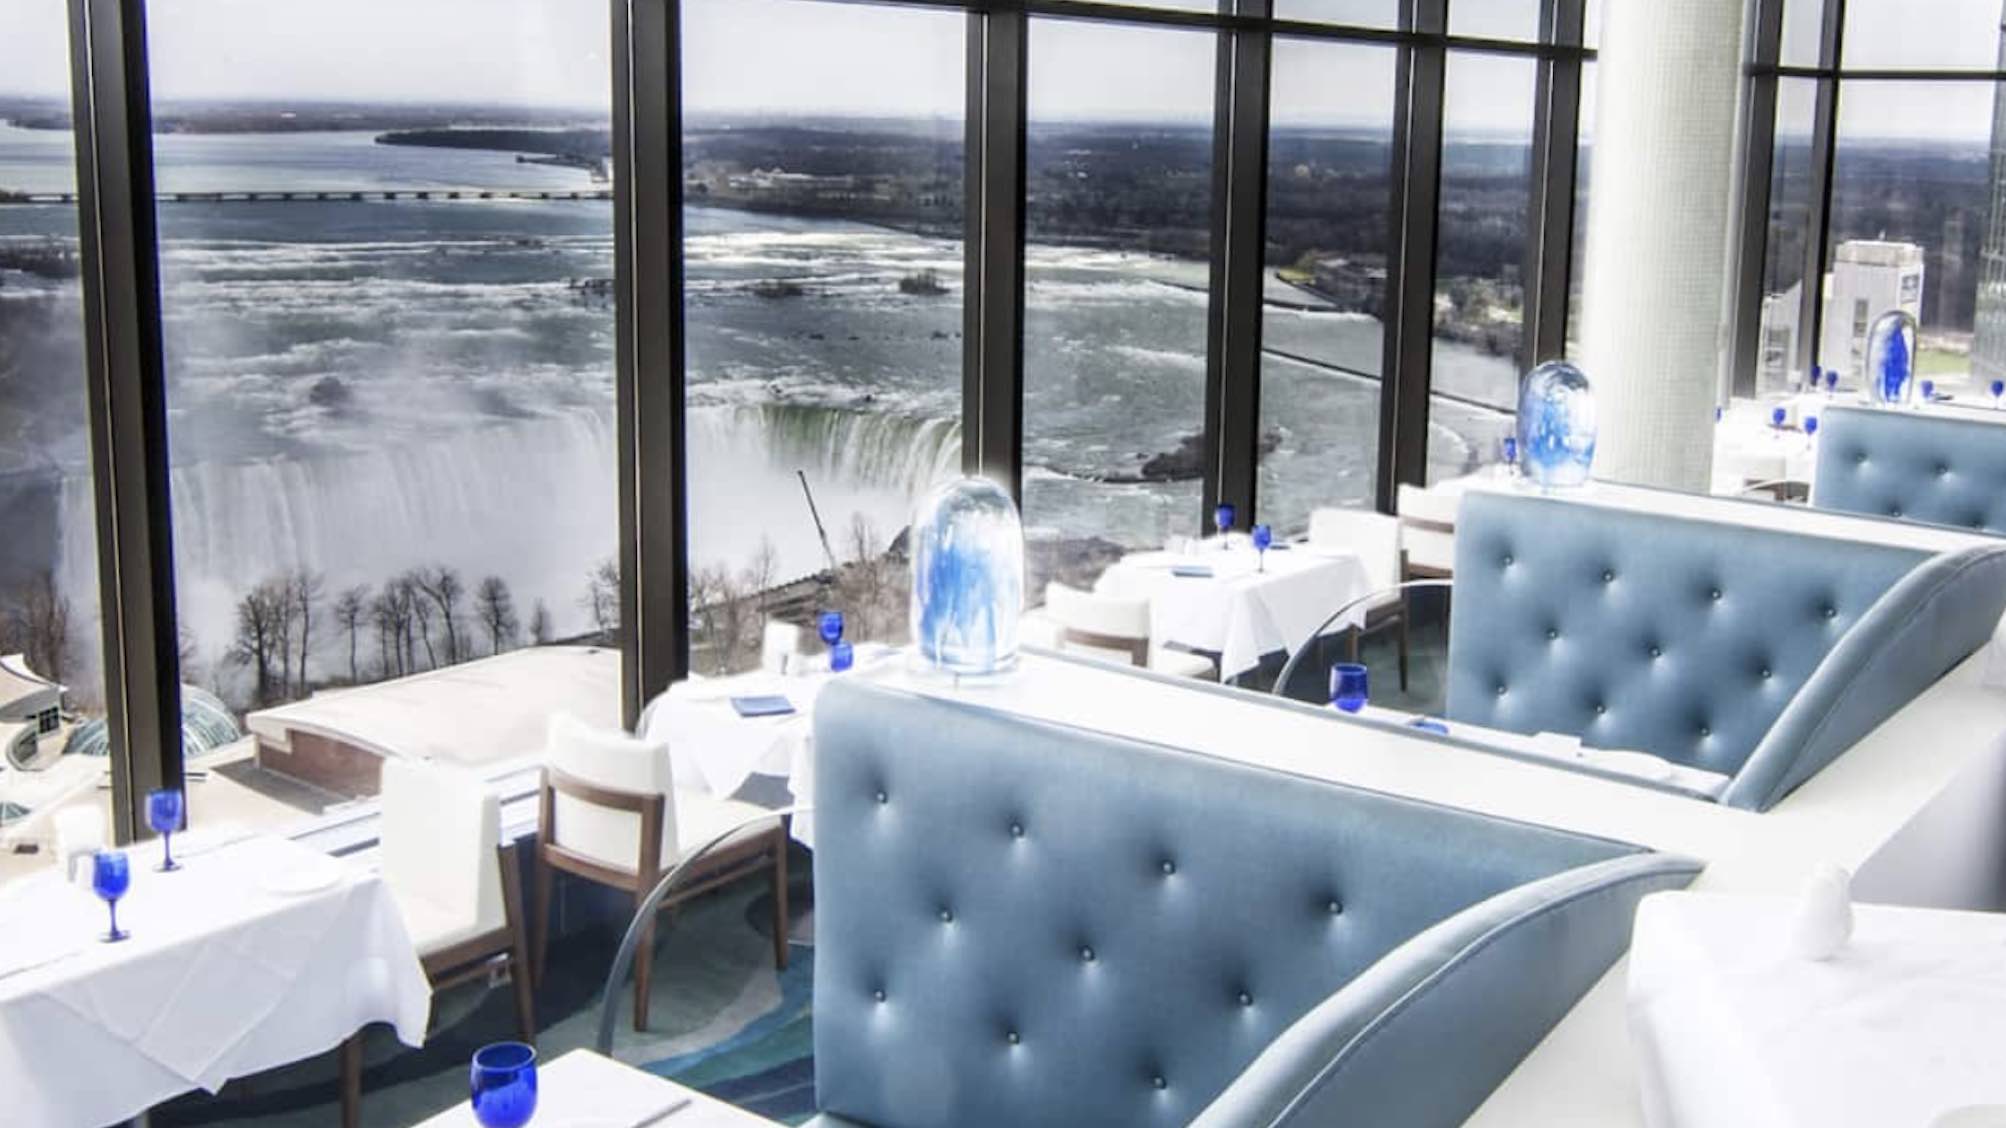  Hilton Niagara Falls:Fallsview Hotel & Suites luxury hotels in niagara falls restaurant seating with falls view